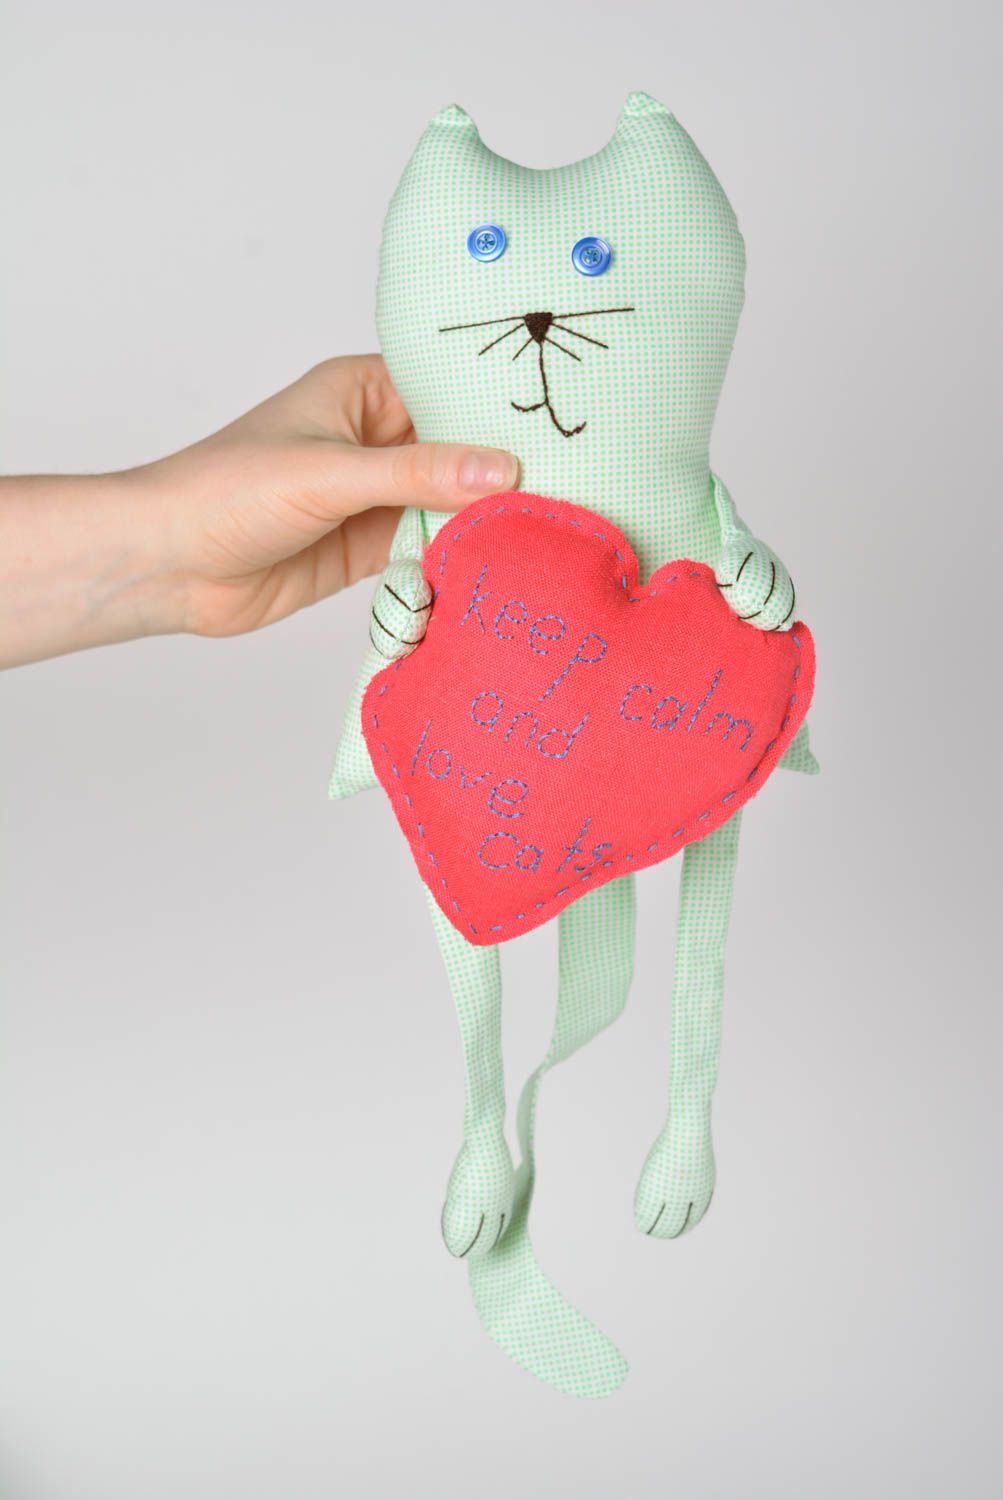 Handmade soft toy decorative stuffed toy present for children nursery decor idea photo 4